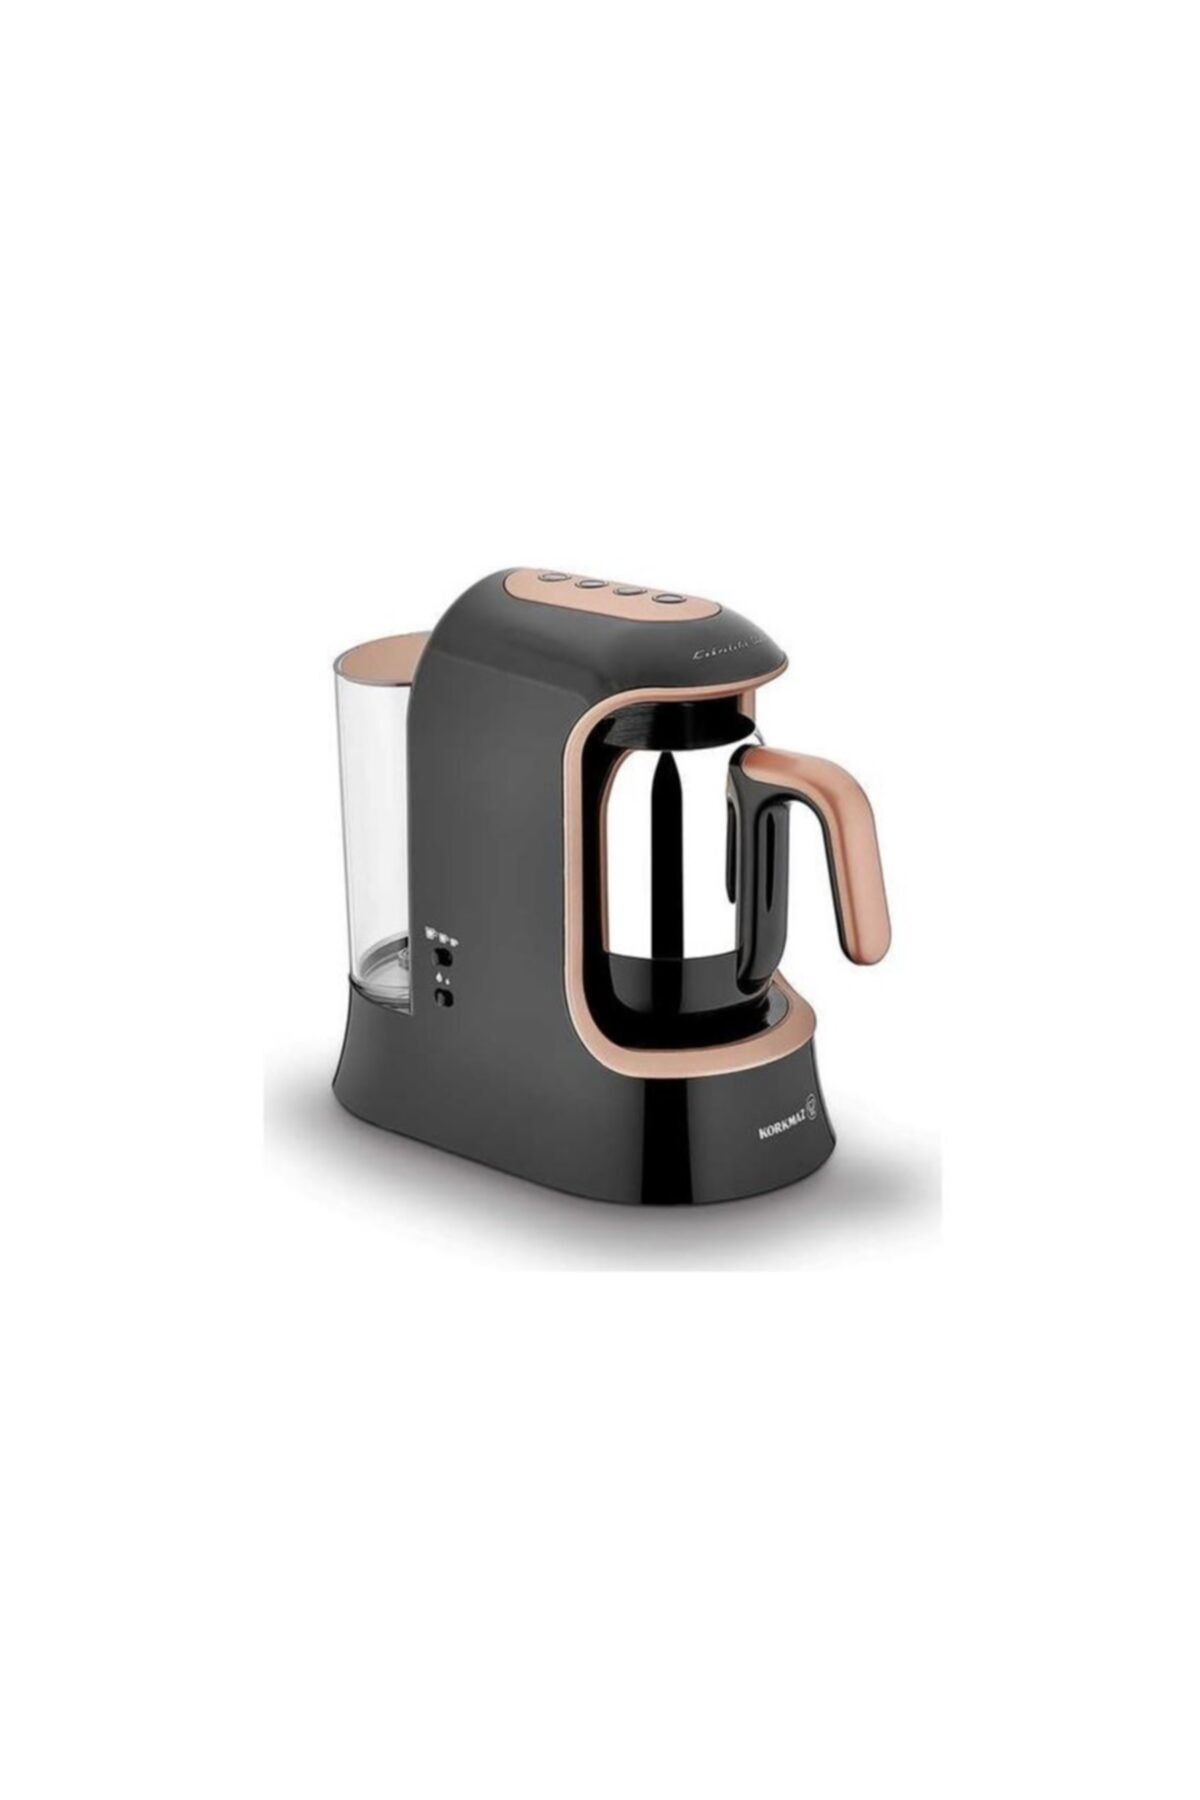 KORKMAZ Kahvekolik Aqua Siyah/rosagold Otomatik Kahve Makinesi A862-02